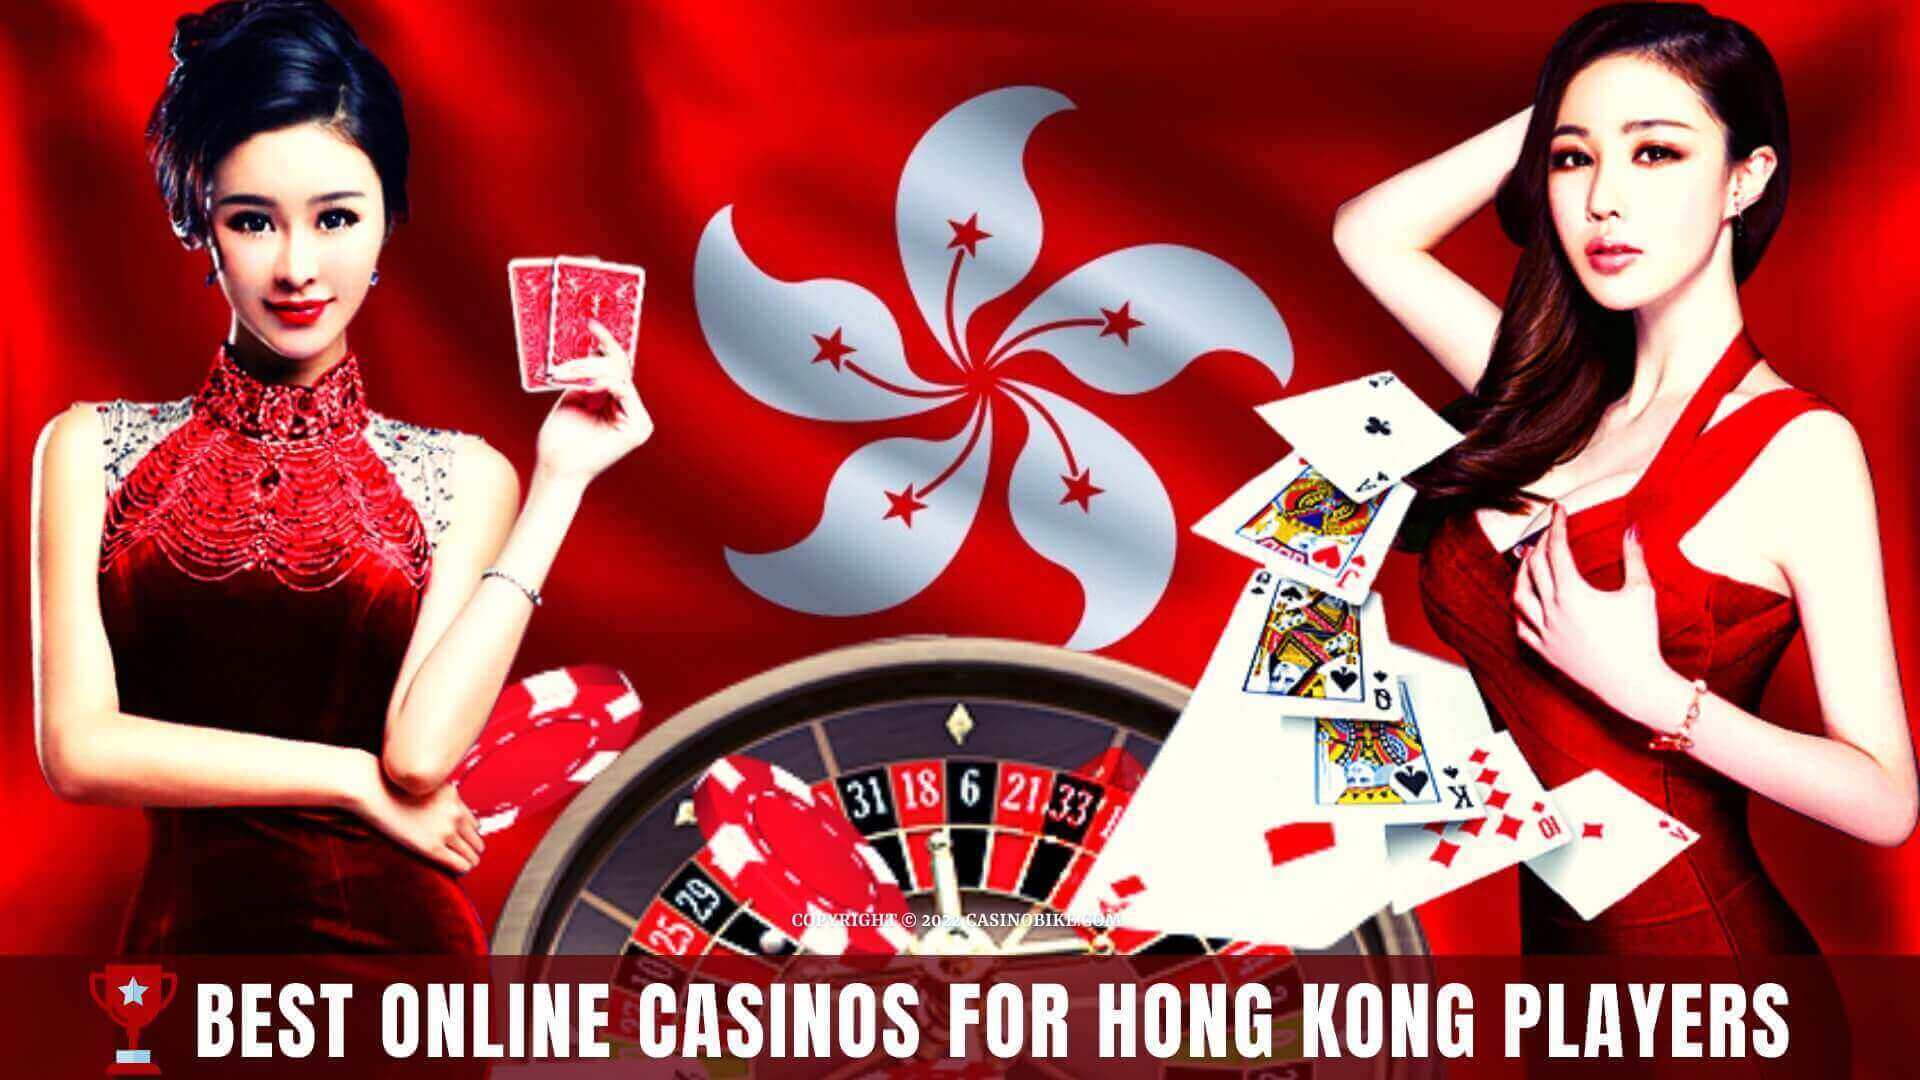 Best Online Casinos for Hong Kong Players